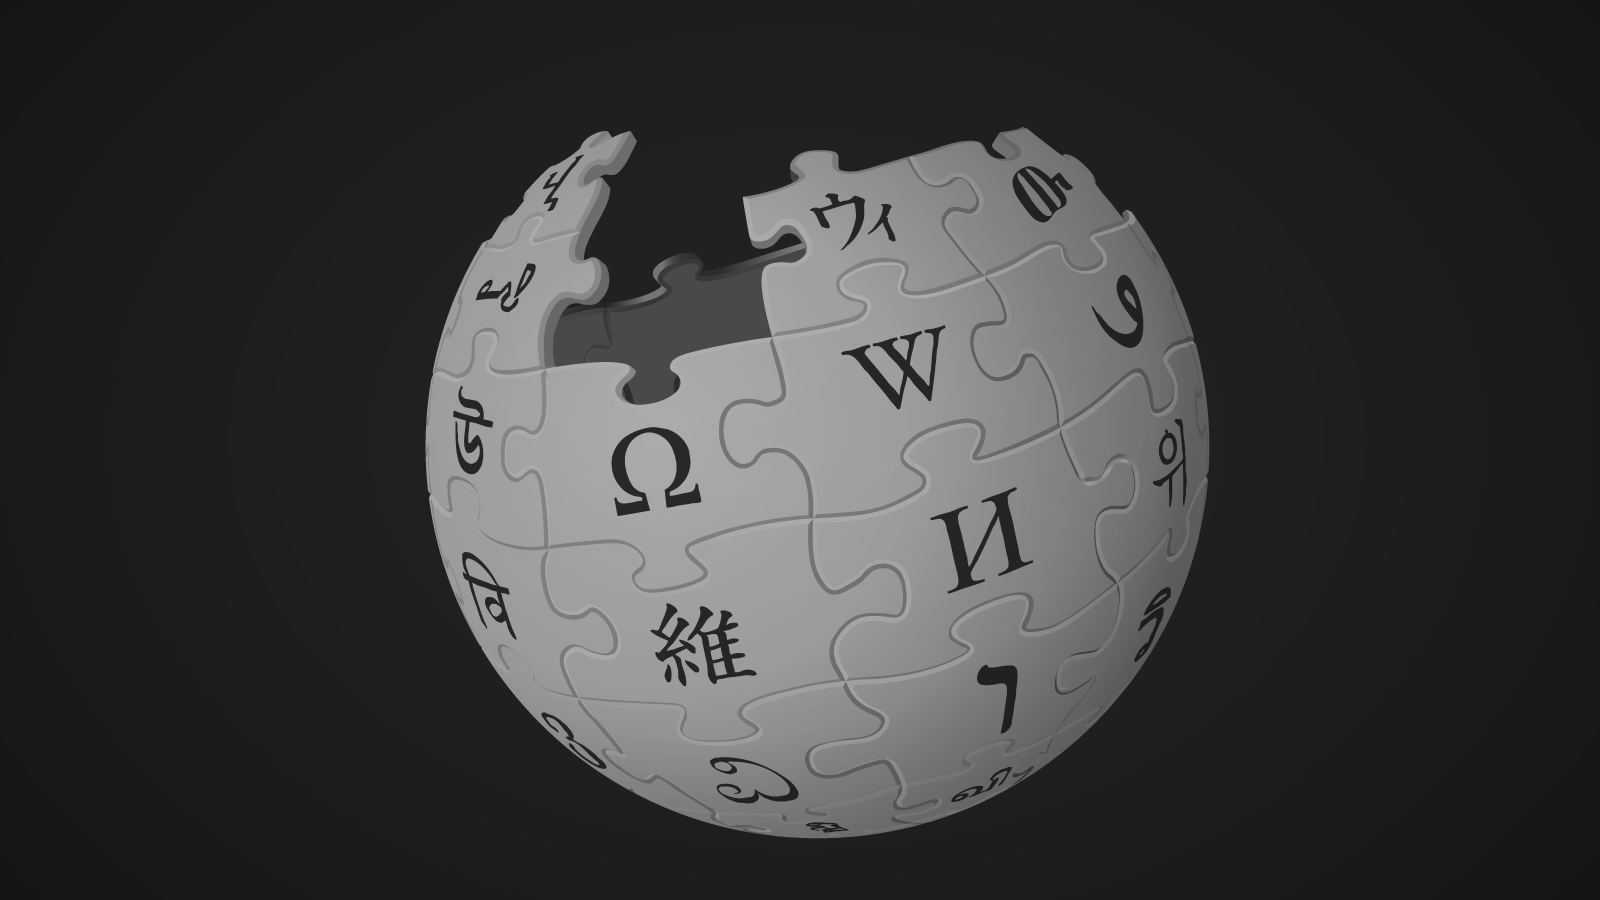 Pakistans 48hour ultimatum to Wikipedia over blasphemous content   World News  Hindustan Times